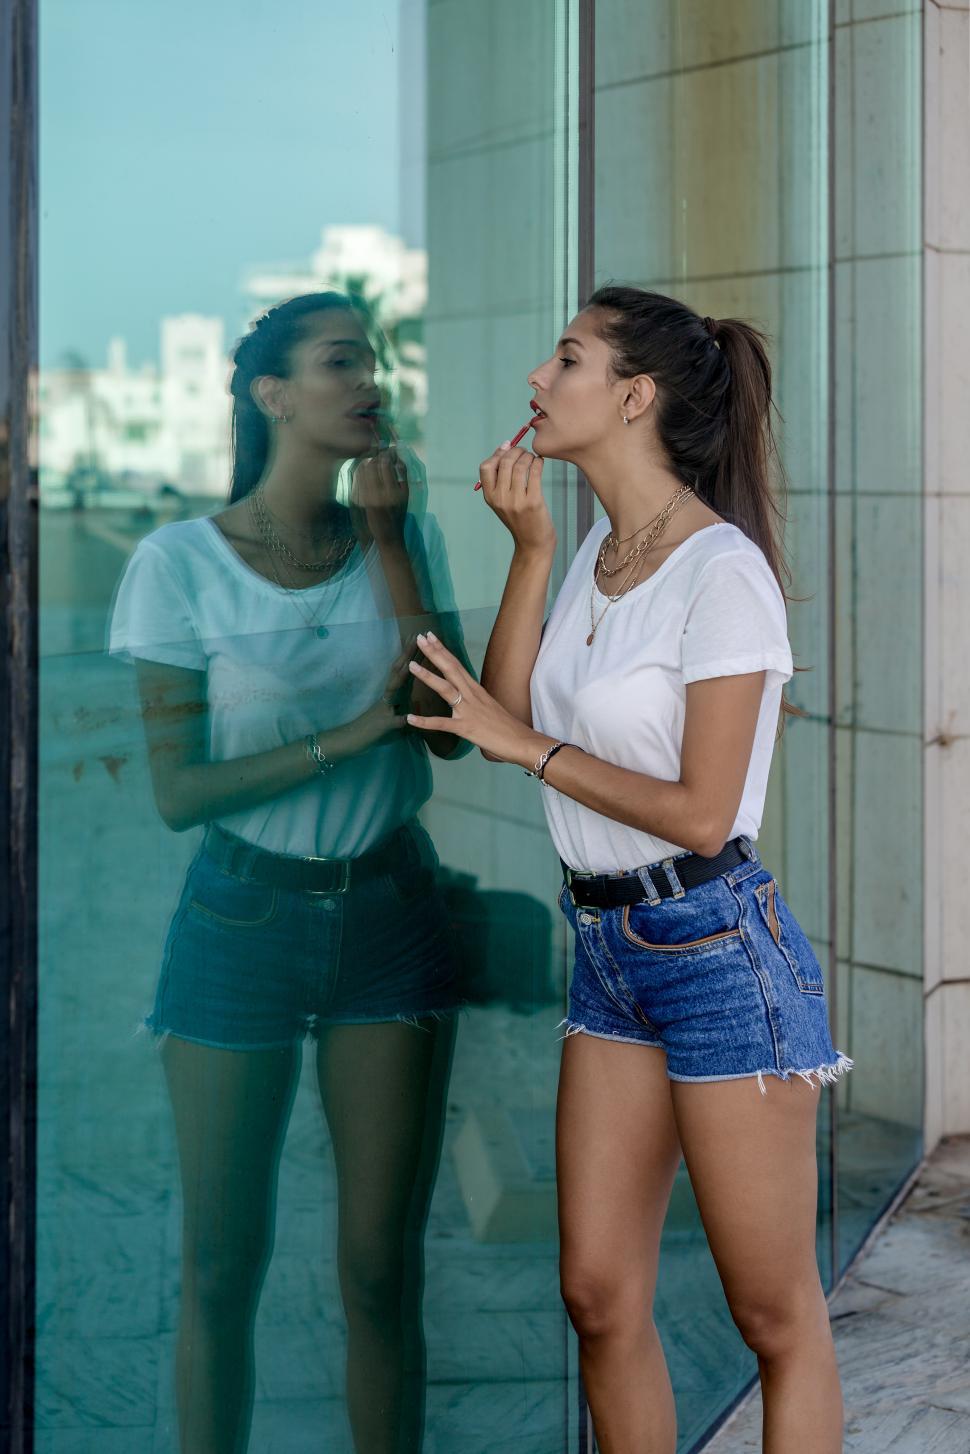 Free Image of Slim woman applying lipstick near glass wall 